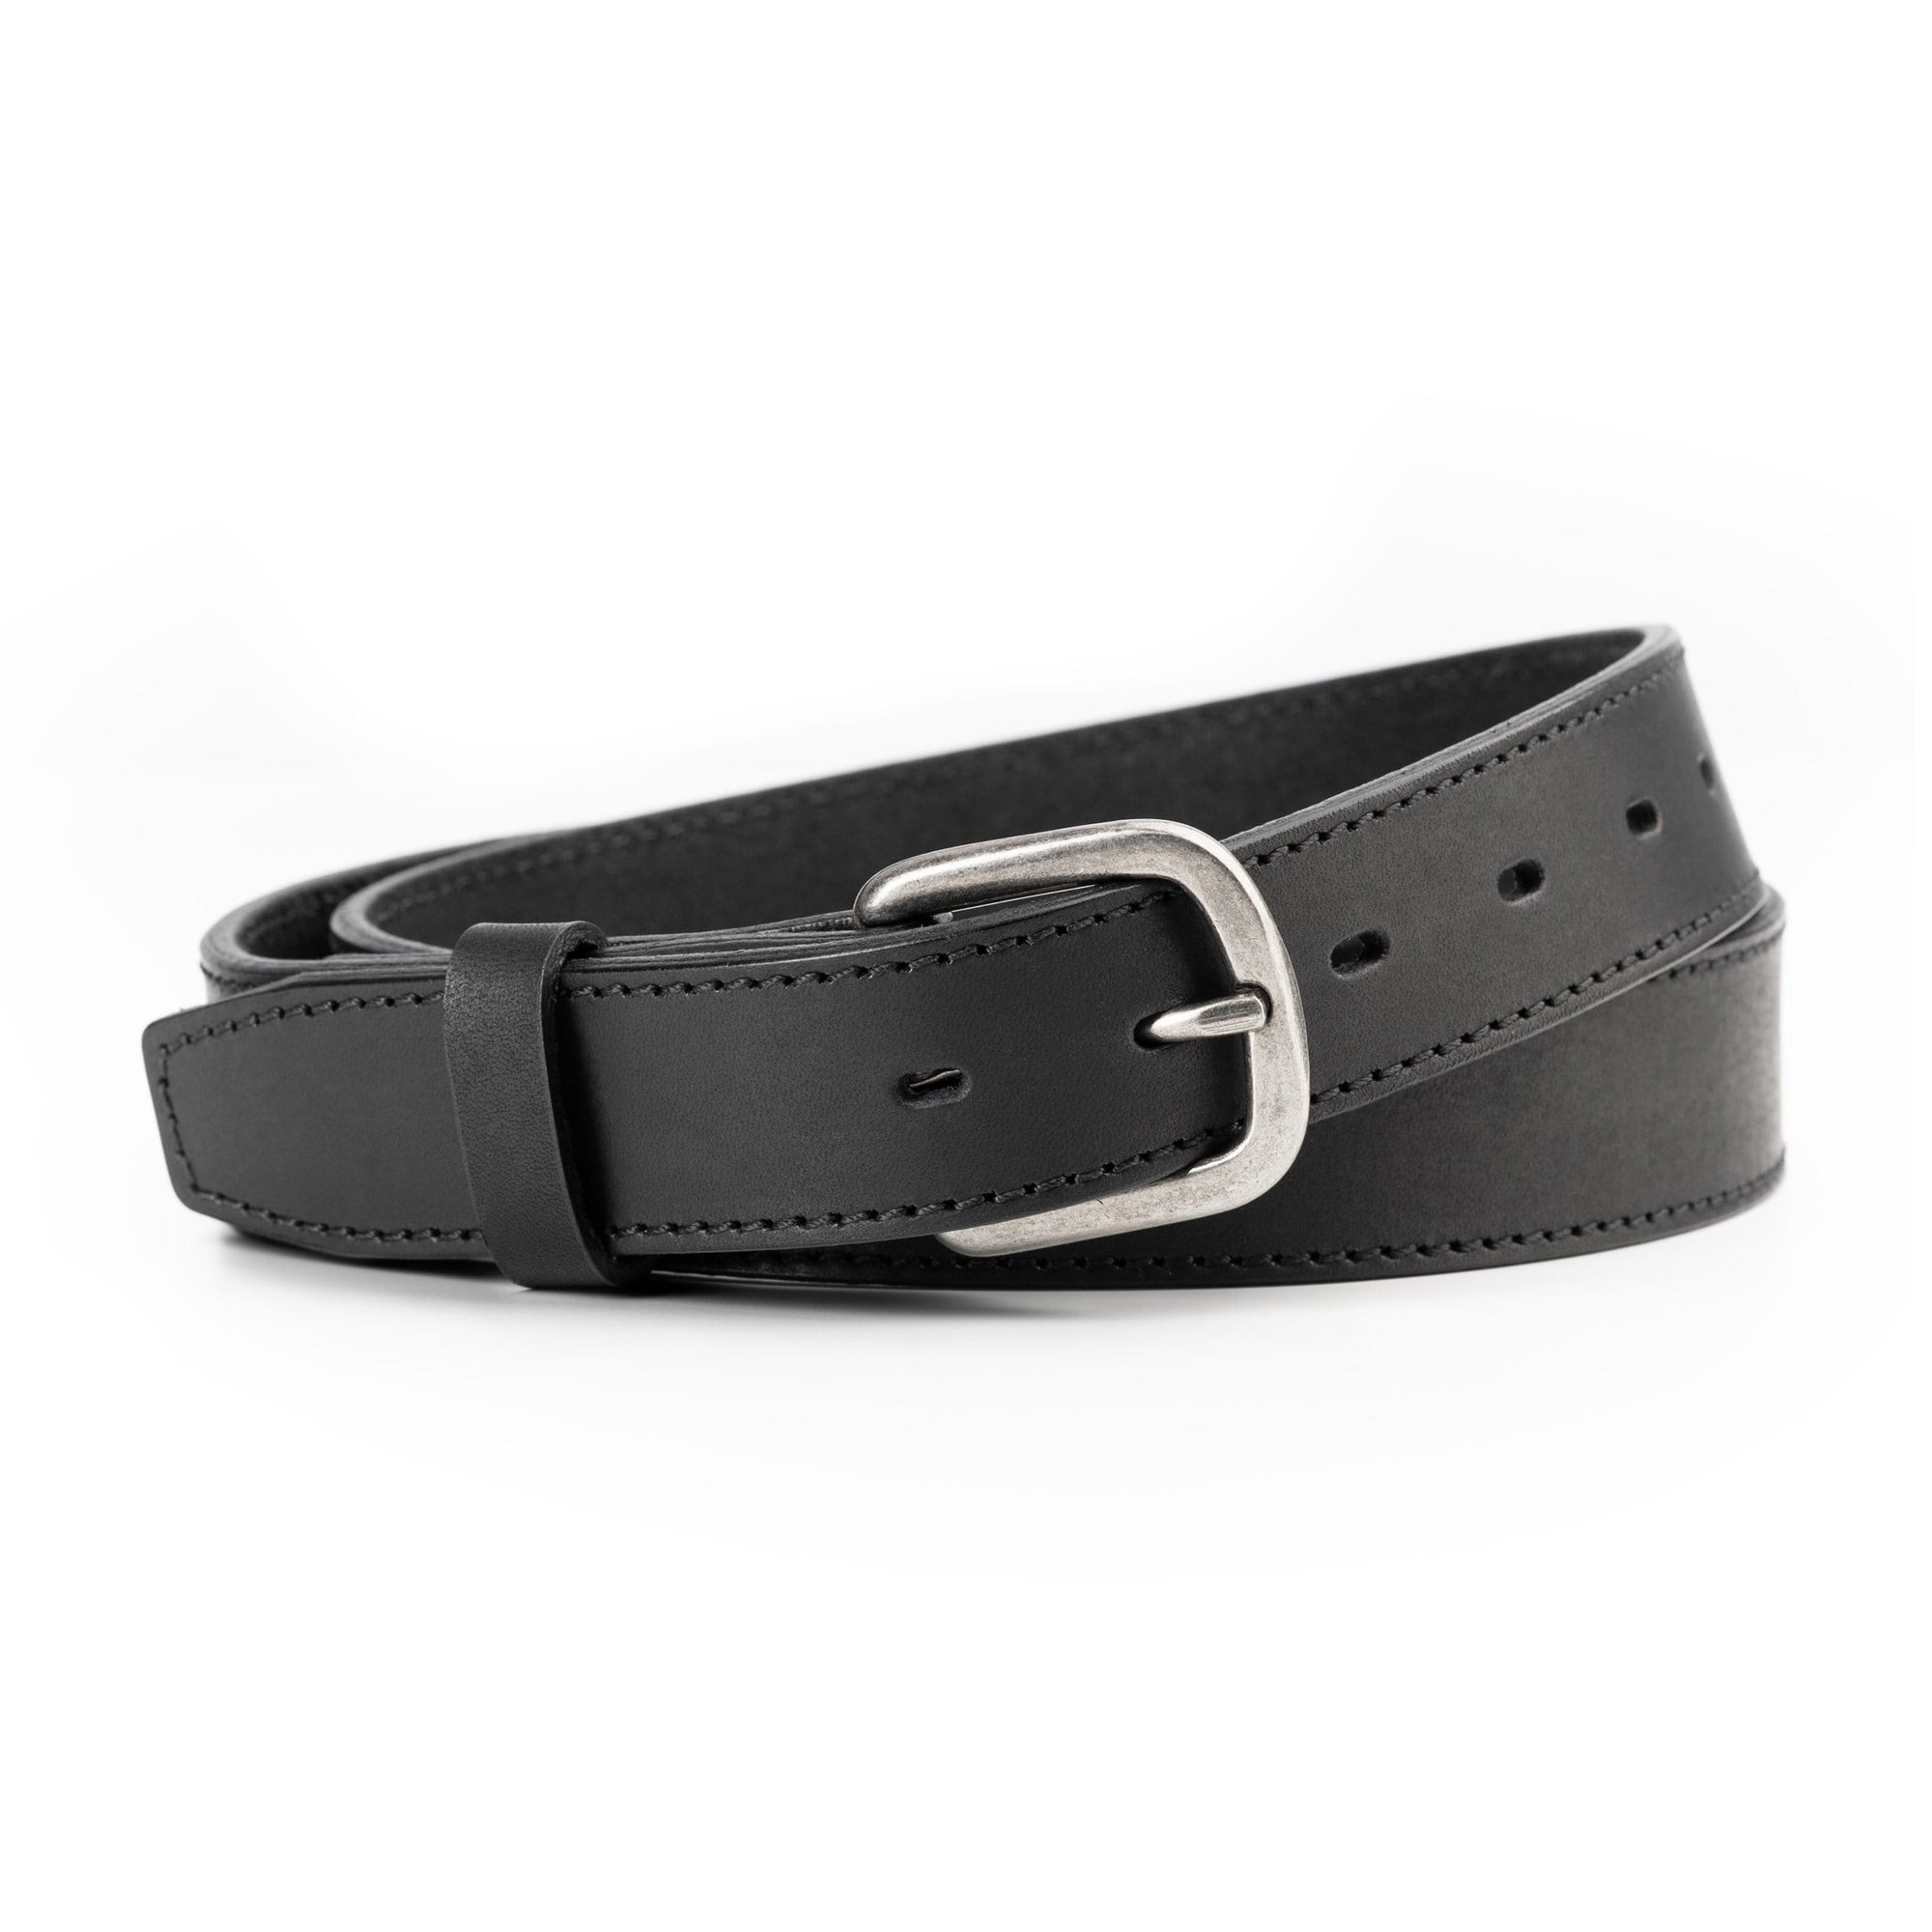 Dress Belt - Black Chromexcel - Made in USA